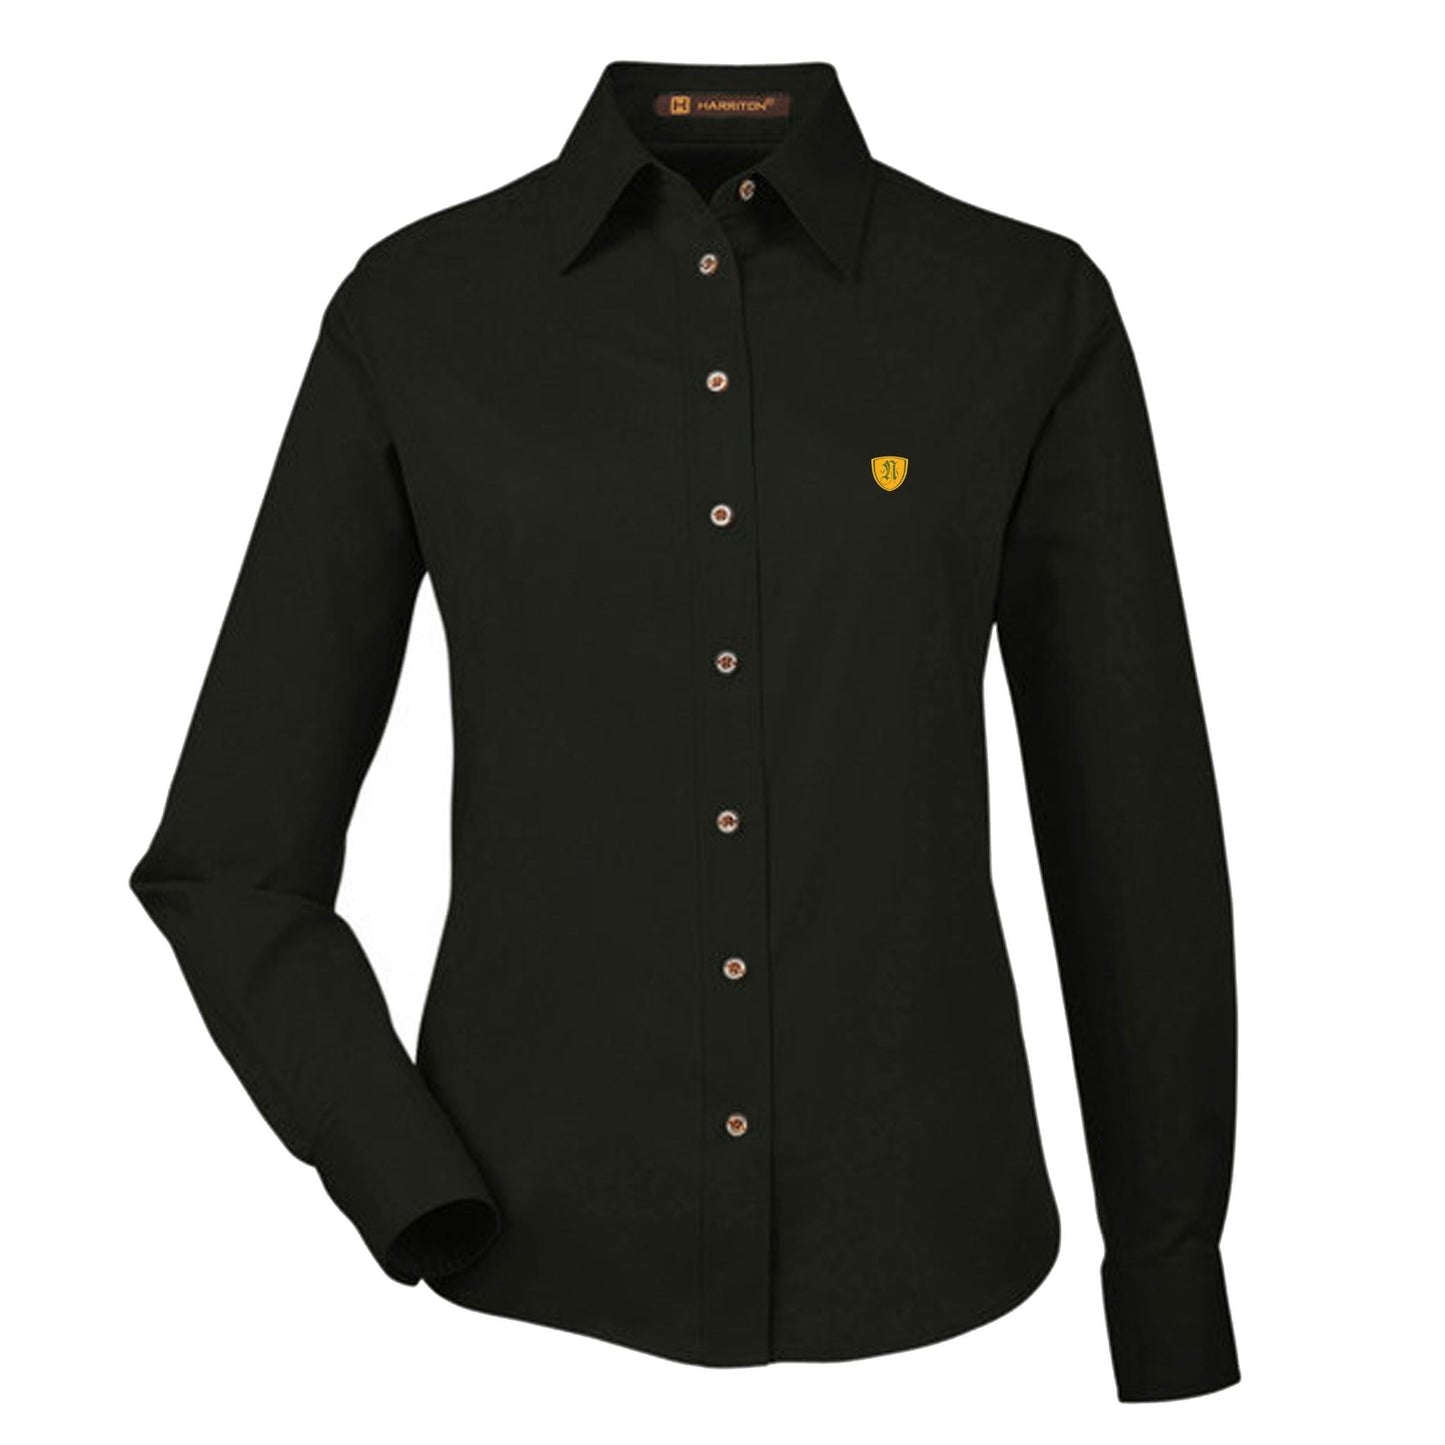 Noblemen - Women's Harriton Twill Long-Sleeve Shirt